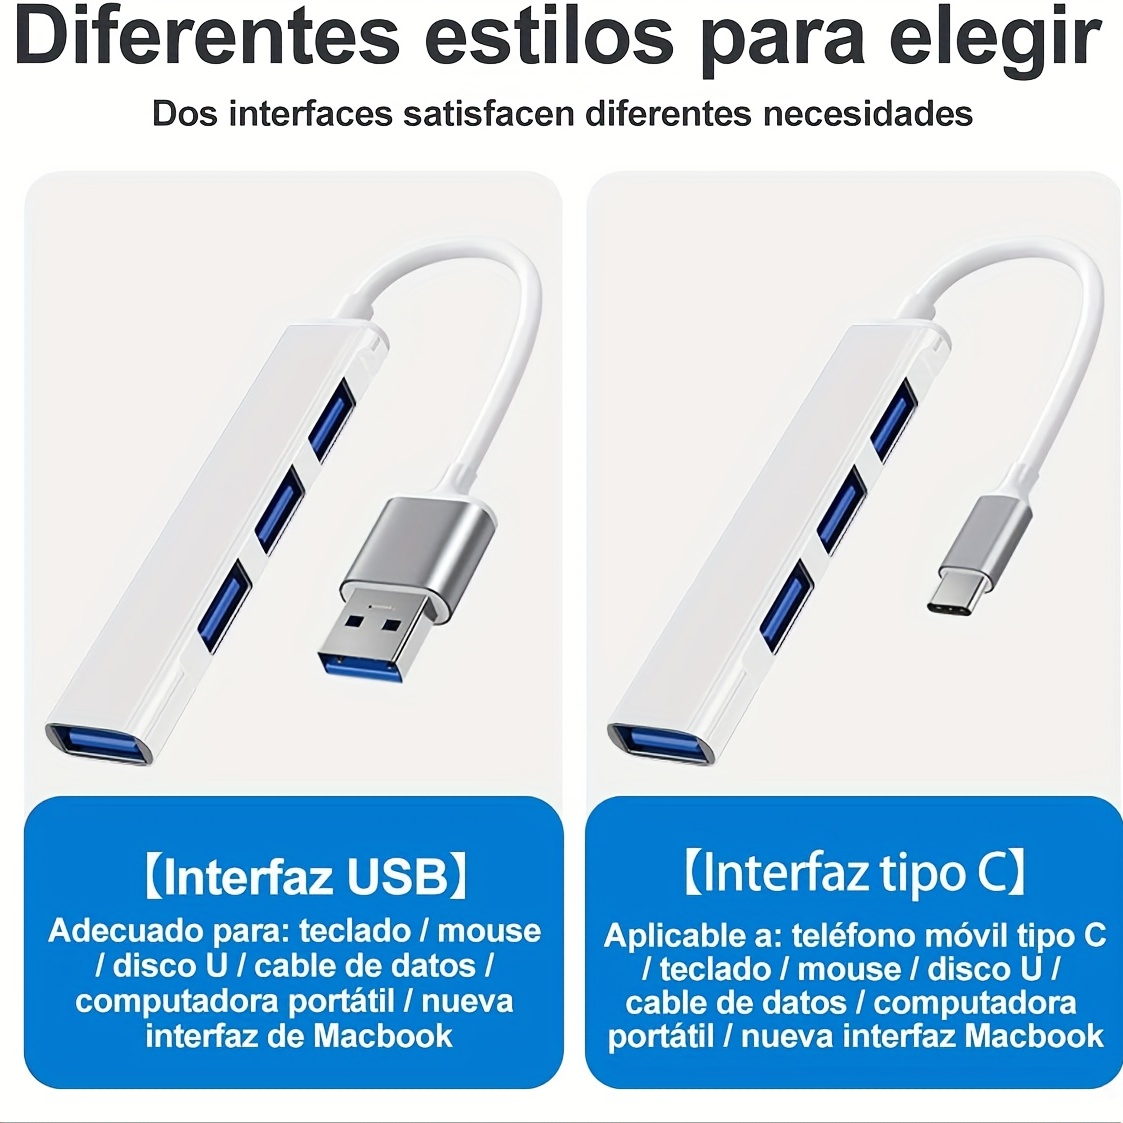  VEMONT USB hub, Aluminum USB 3.0 Data Hub with